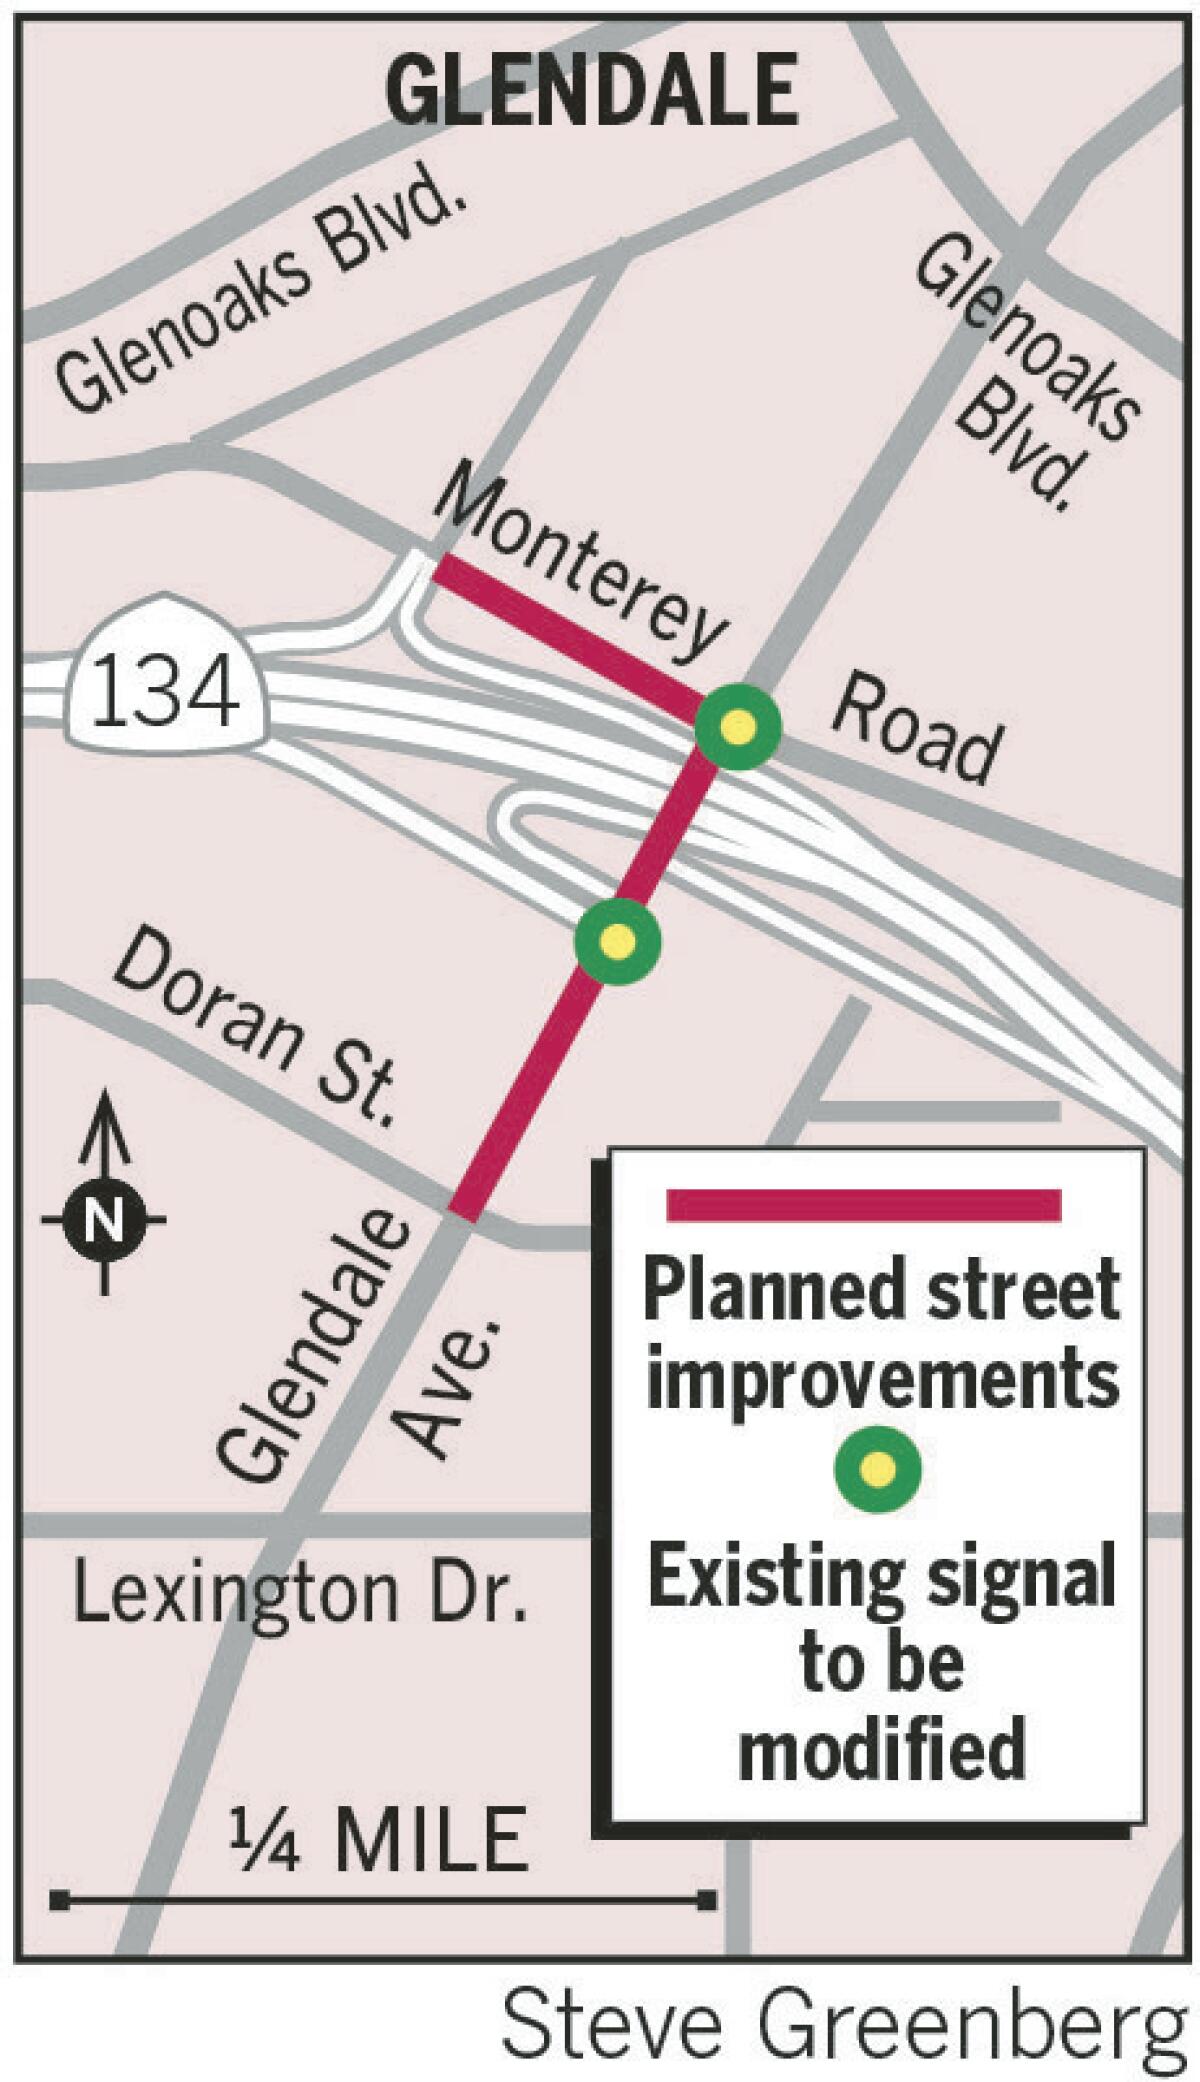 Planned street improvements along Glendale Ave.